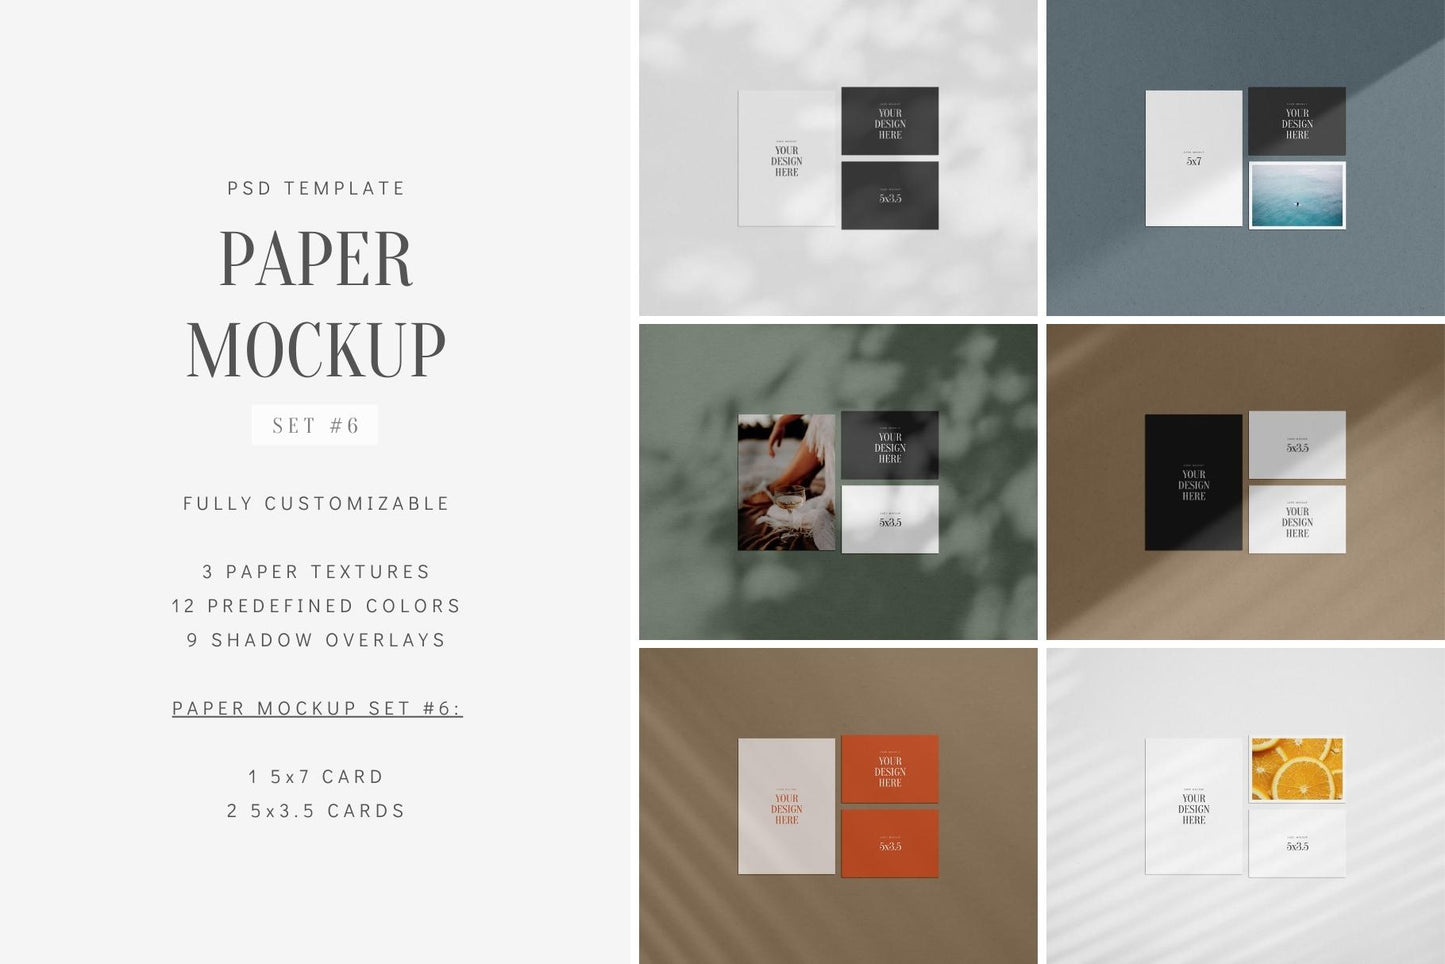 PAPER MOCKUP SET #6 | Card Mockup: 5x7, 5x3.5 | PSD Mockup